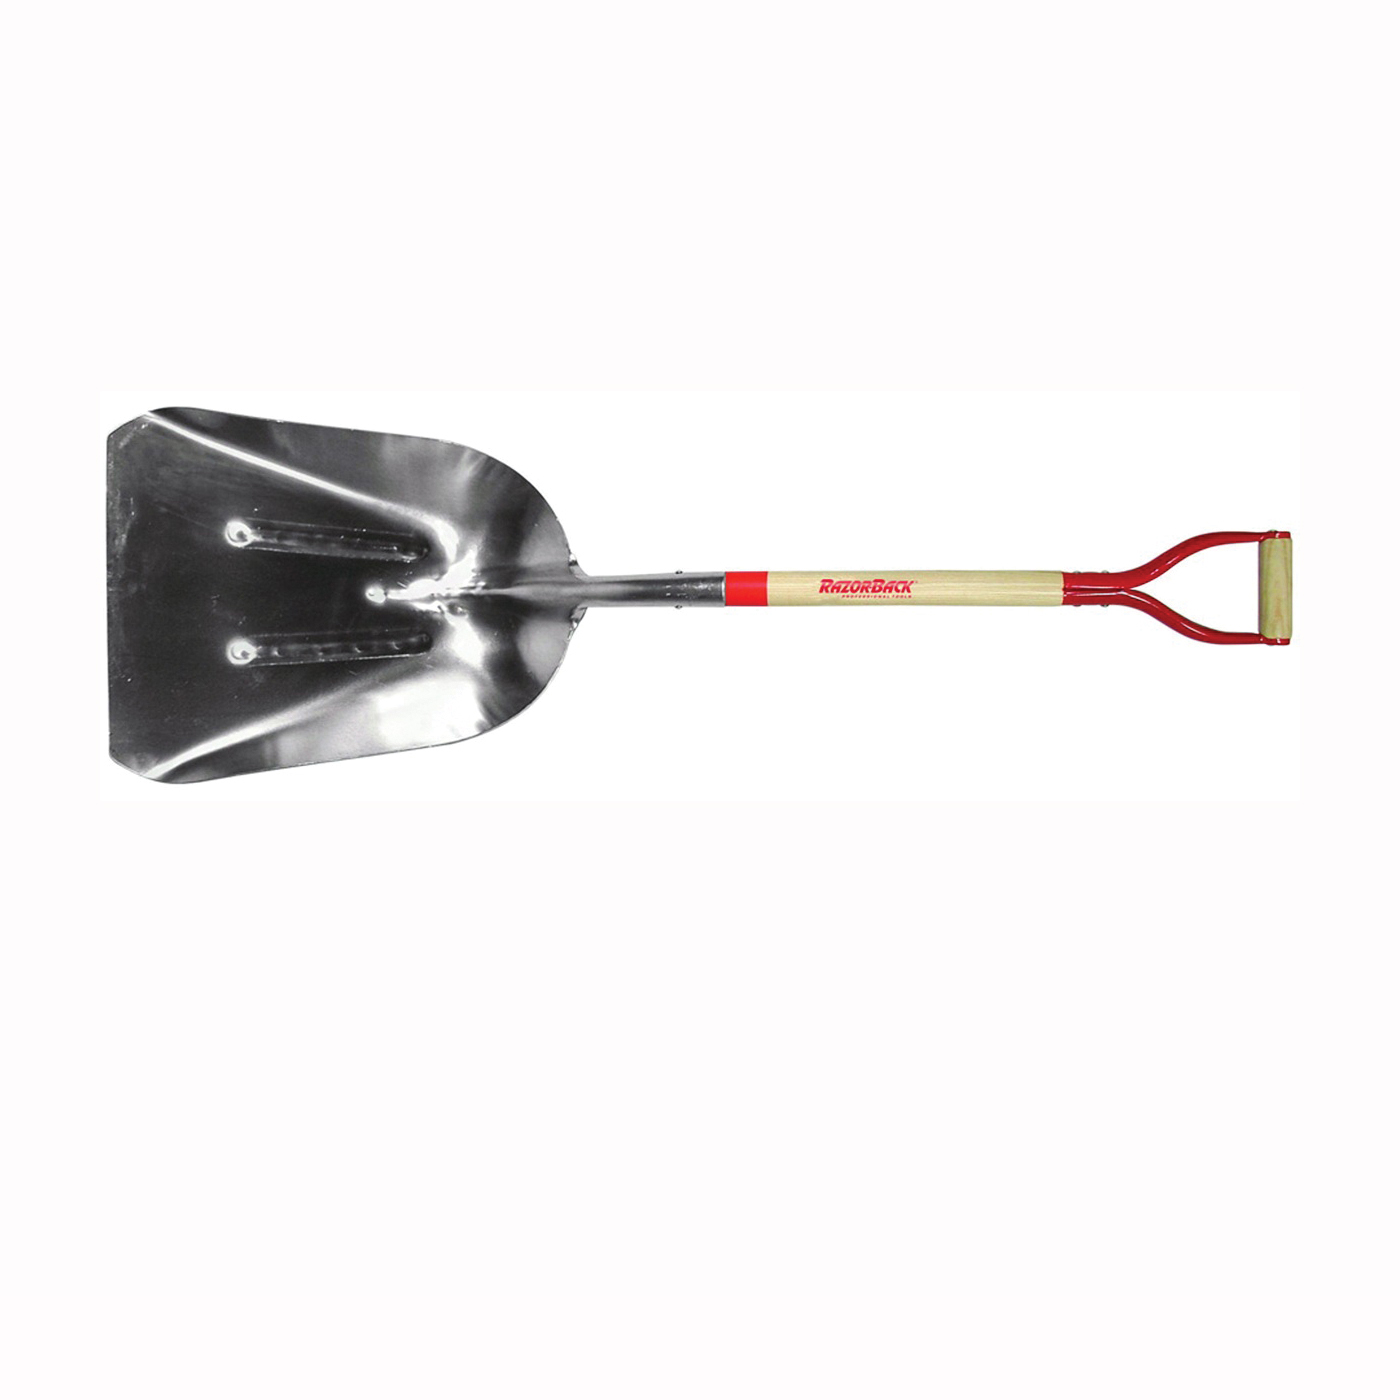 53130 Scoop Shovel, 15-1/4 in W Blade, 19-3/4 in L Blade, Aluminum Blade, Hardwood Handle, D-Shaped Handle